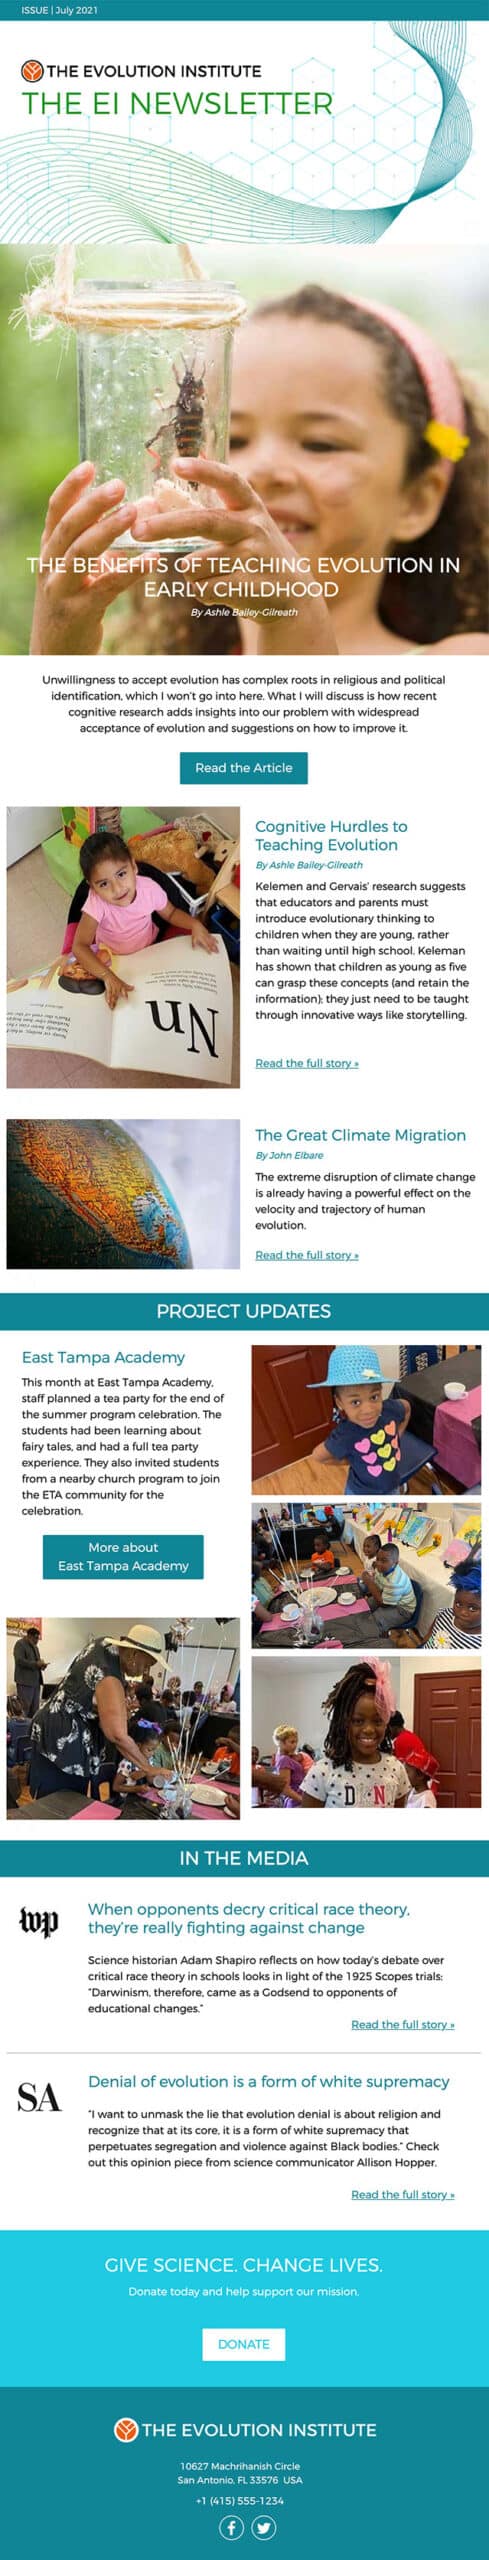 Evolution Institute Newsletter